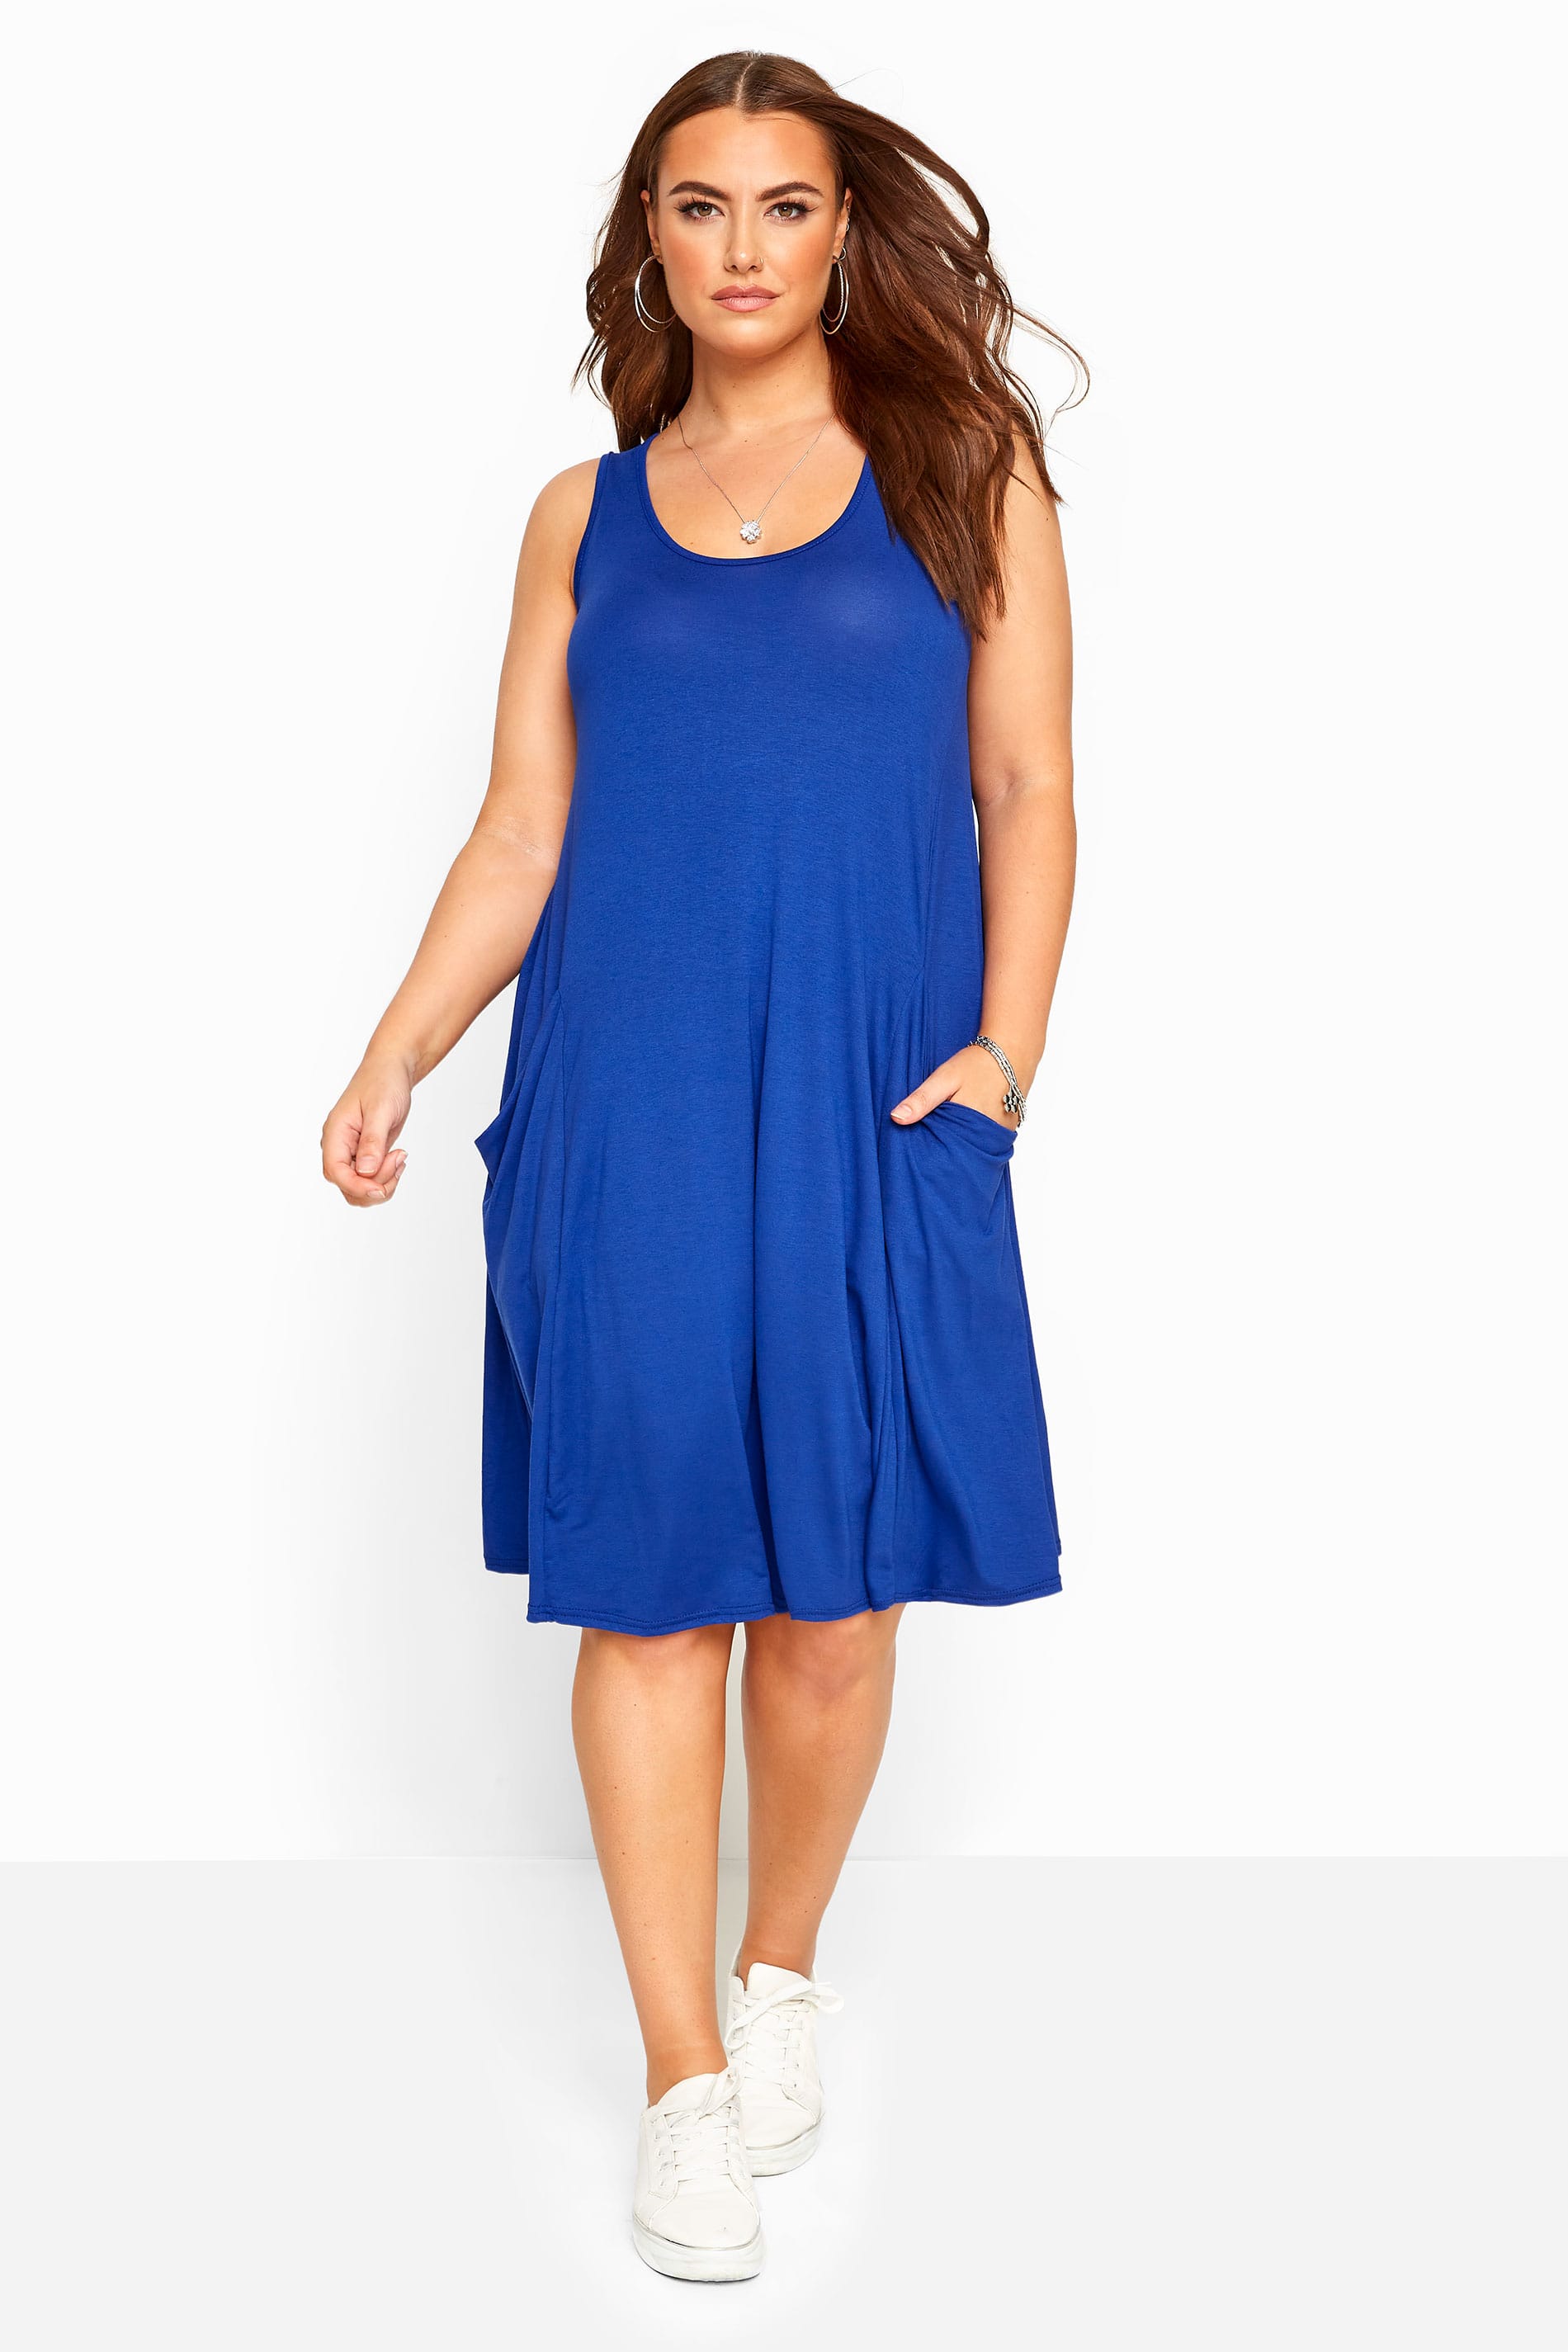 Cobalt Blue Sleeveless Drape Pocket Dress | Yours Clothing